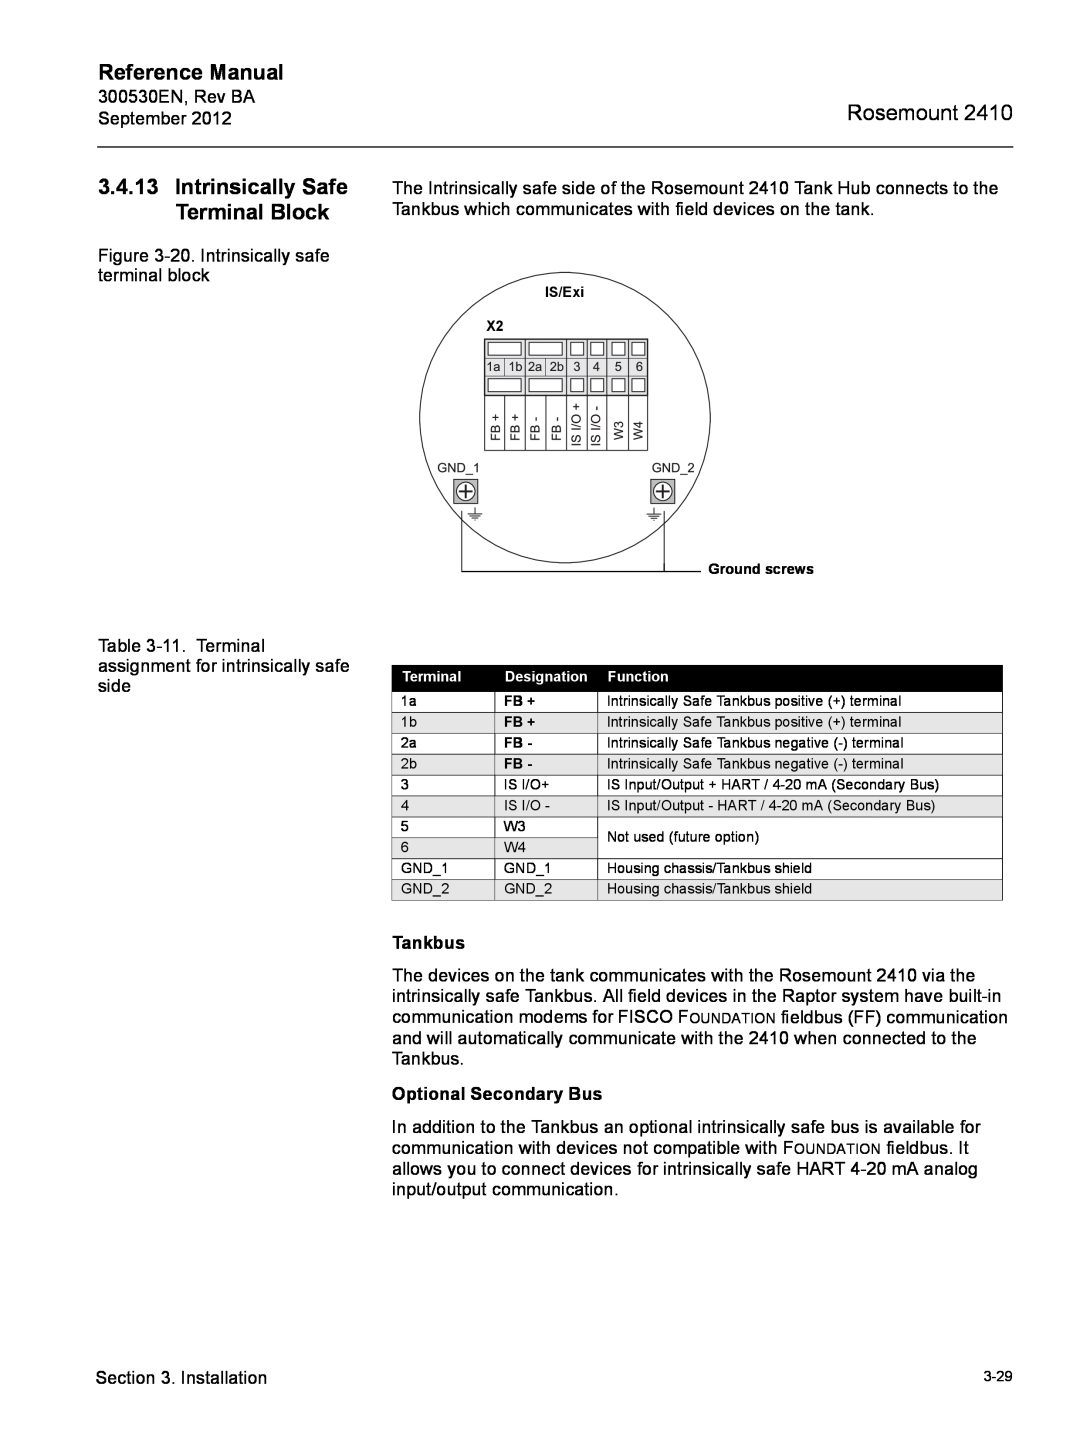 Emerson Process Management Rosemount 2410 manual Intrinsically Safe Terminal Block, Tankbus, Optional Secondary Bus 